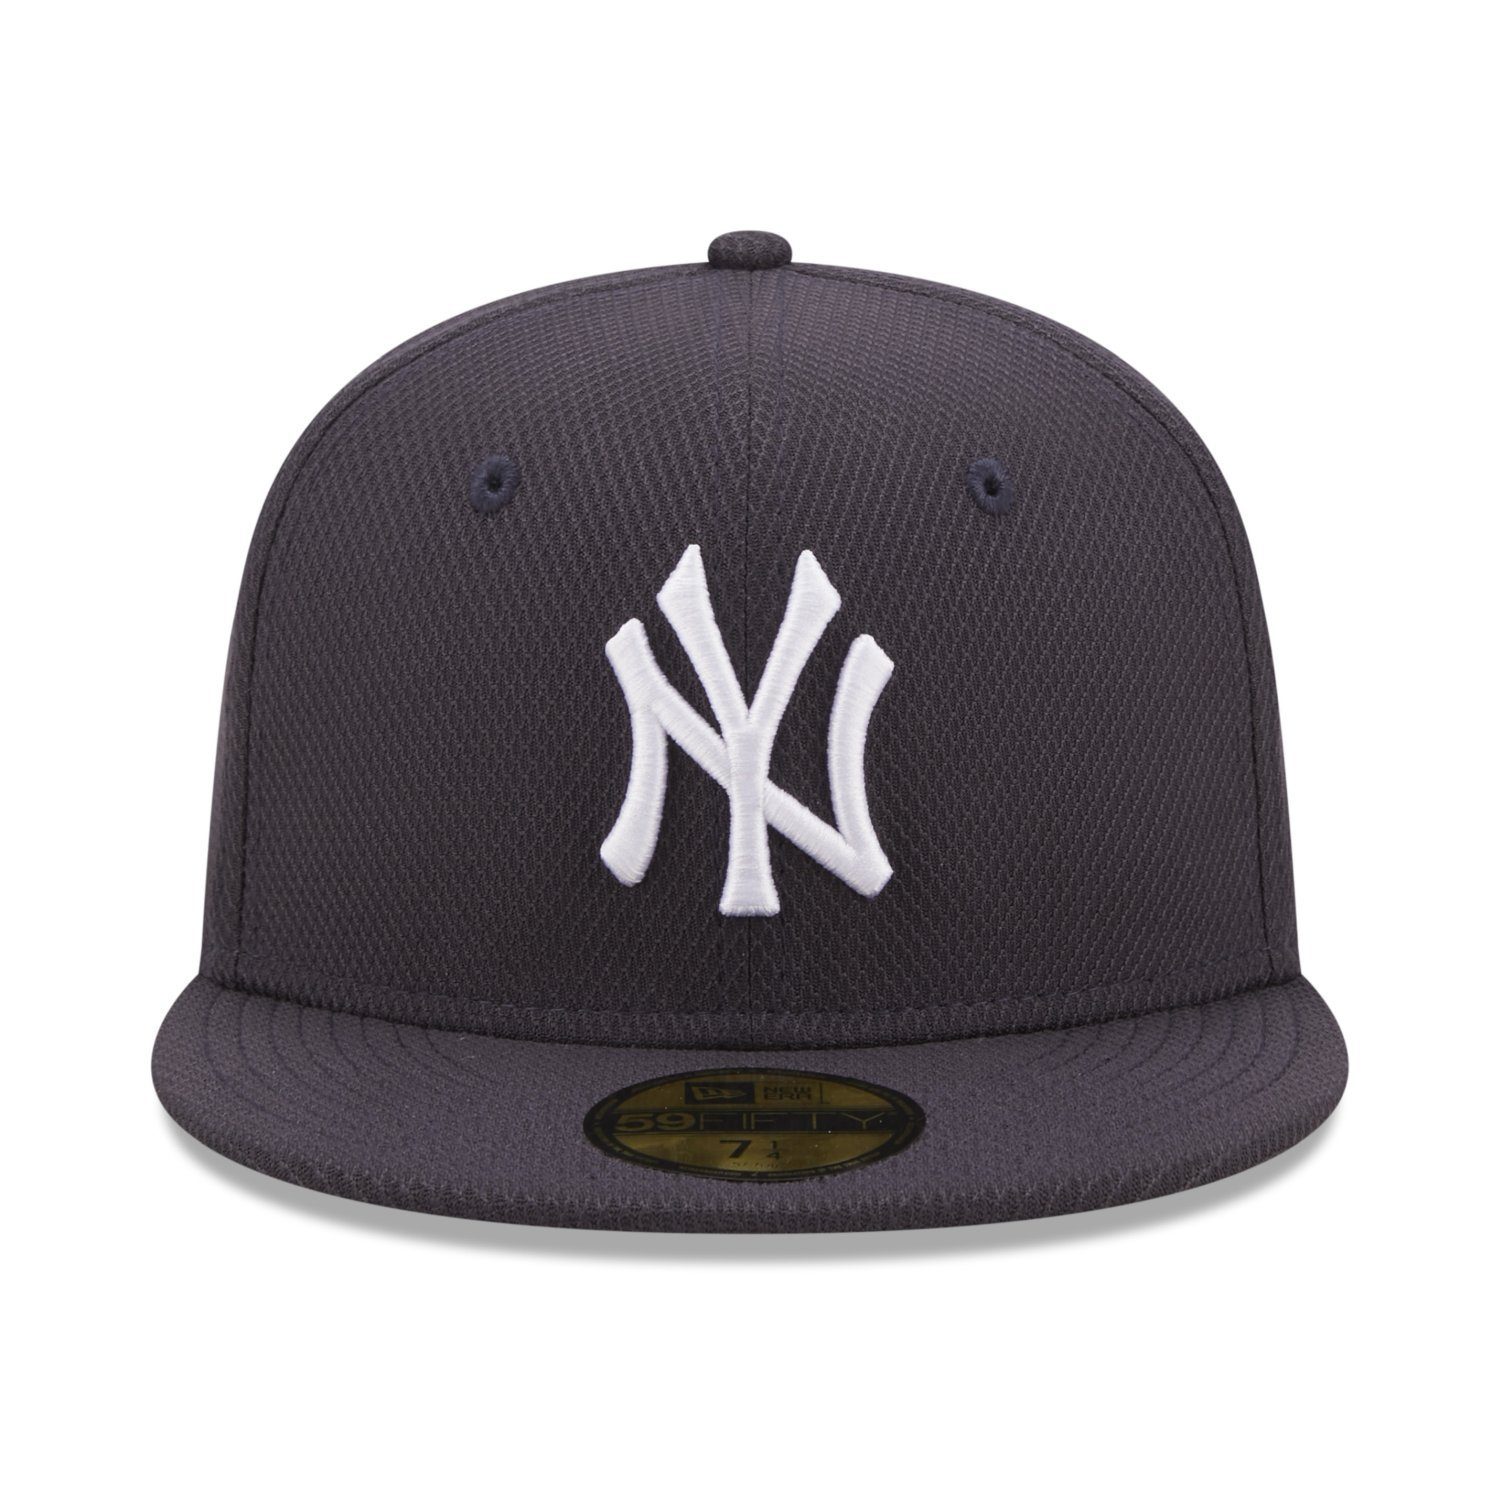 New Era Fitted Cap 59Fifty New York Yankees dunkelblau DIAMOND